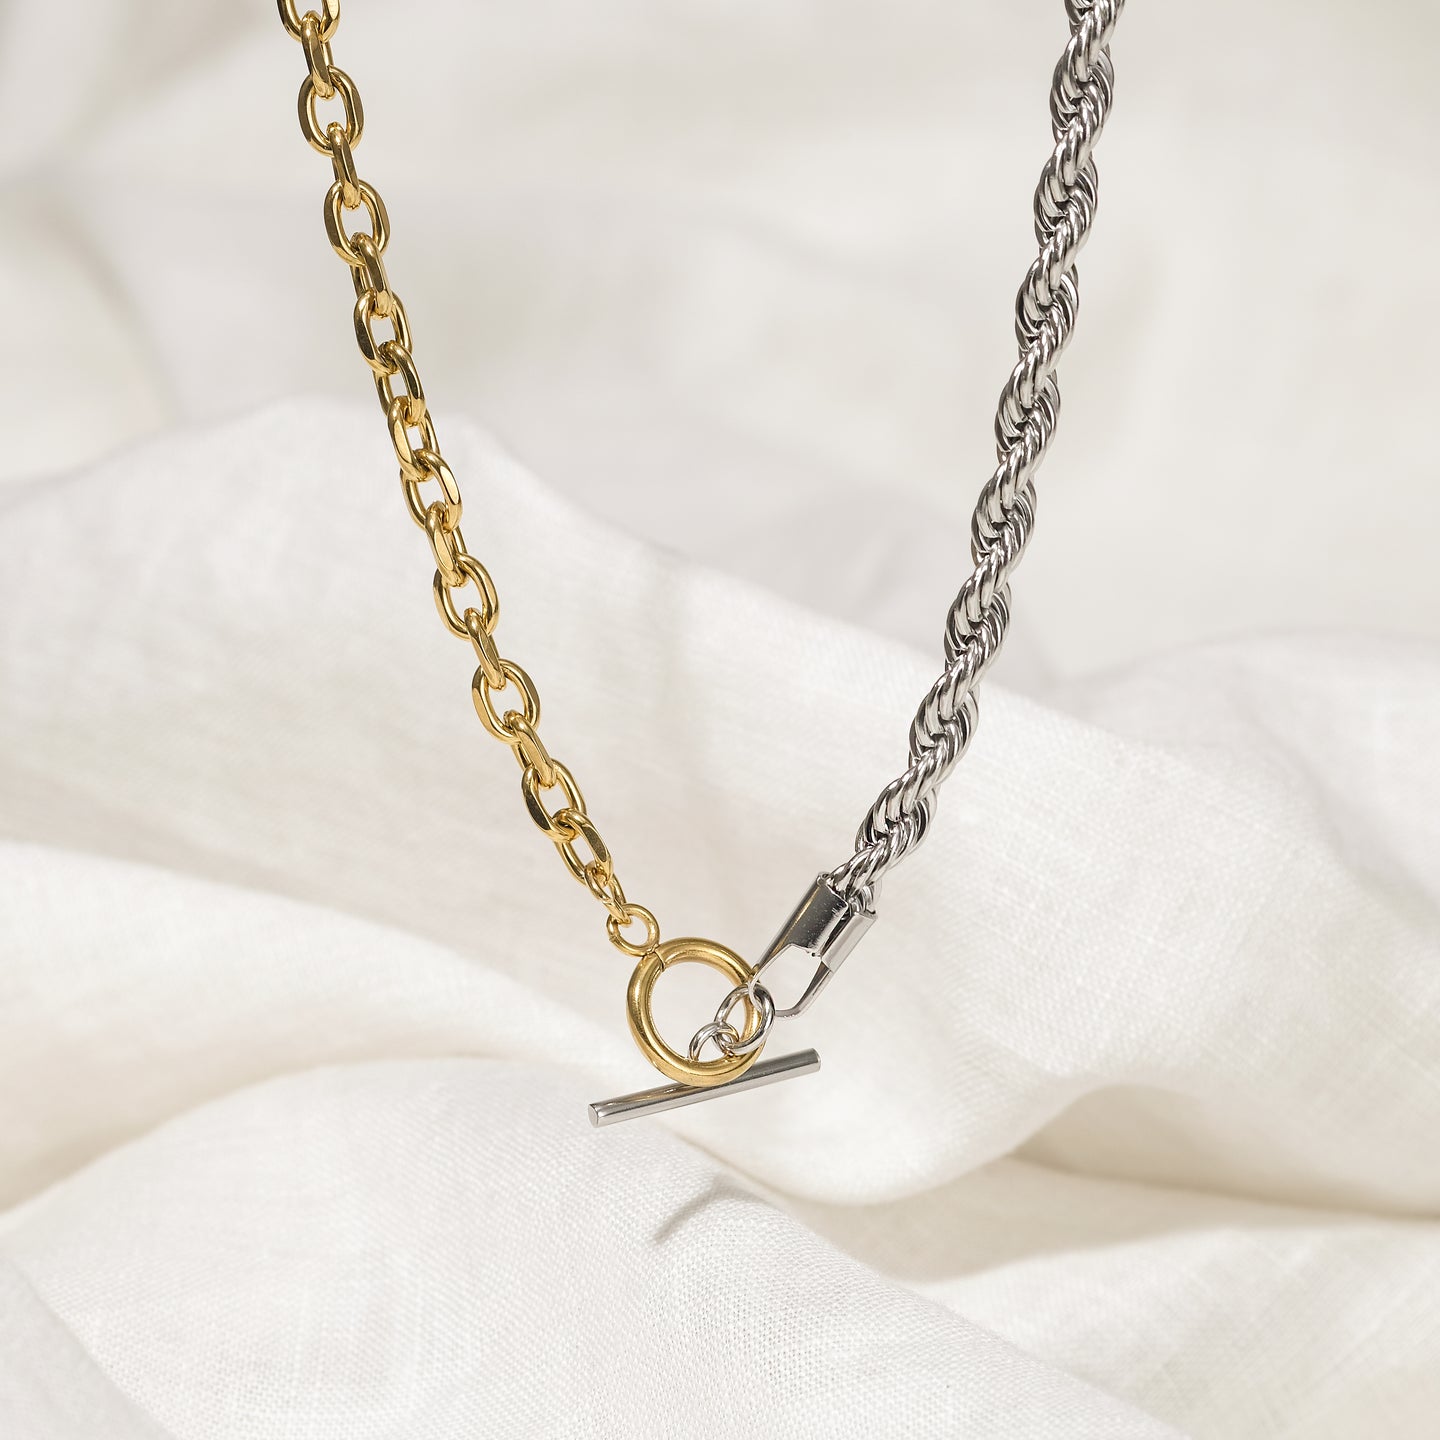 files/tiya-necklace-18k-gold-stainless-steel-1-new.jpg